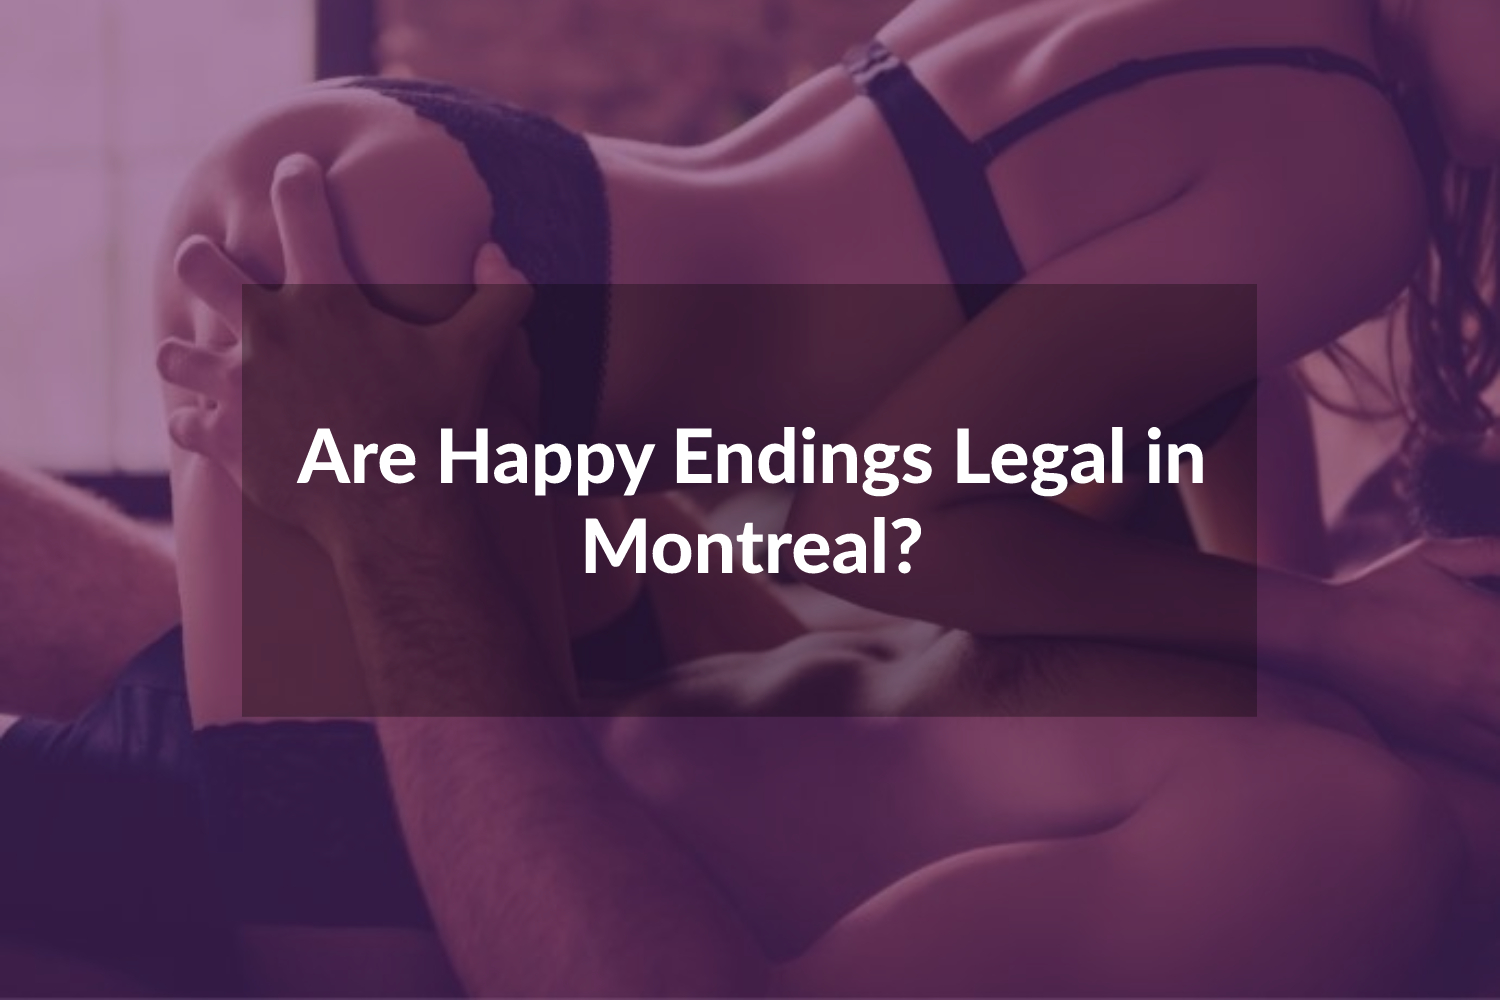 ali qarqour recommends Happy Ending Massage Montreal